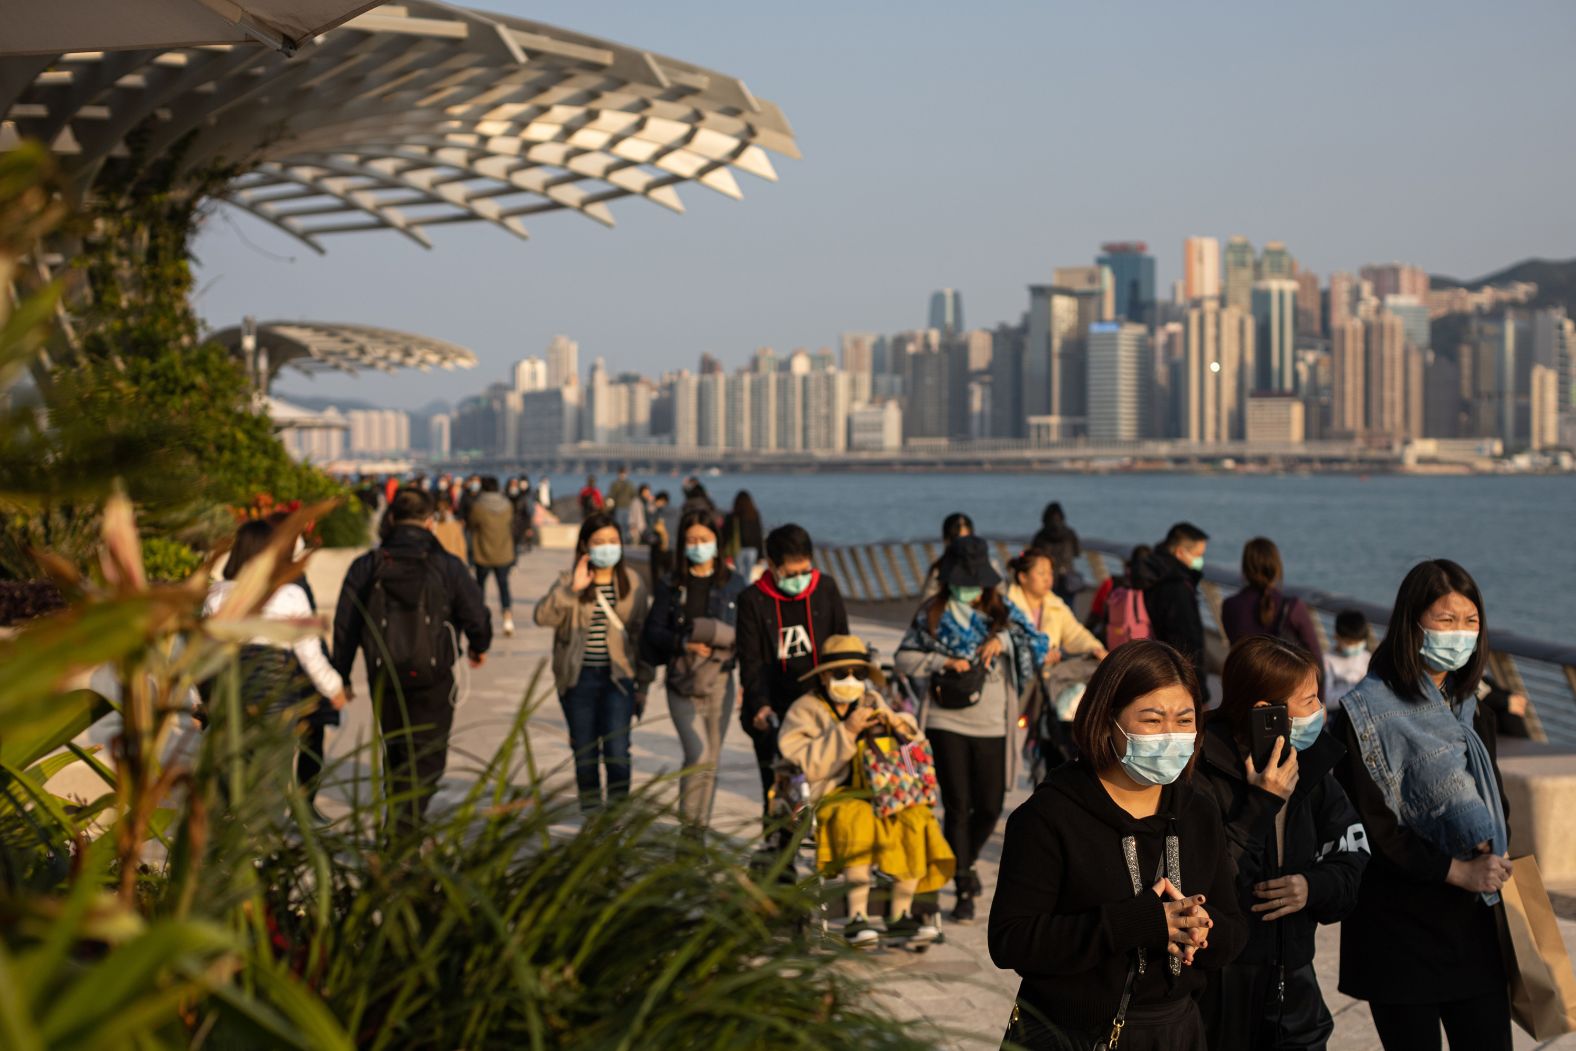 People wear face masks on the Tsim Sha Tsui waterfront promenade in Hong Kong in January 2020, as the novel coronavirus was spreading worldwide.